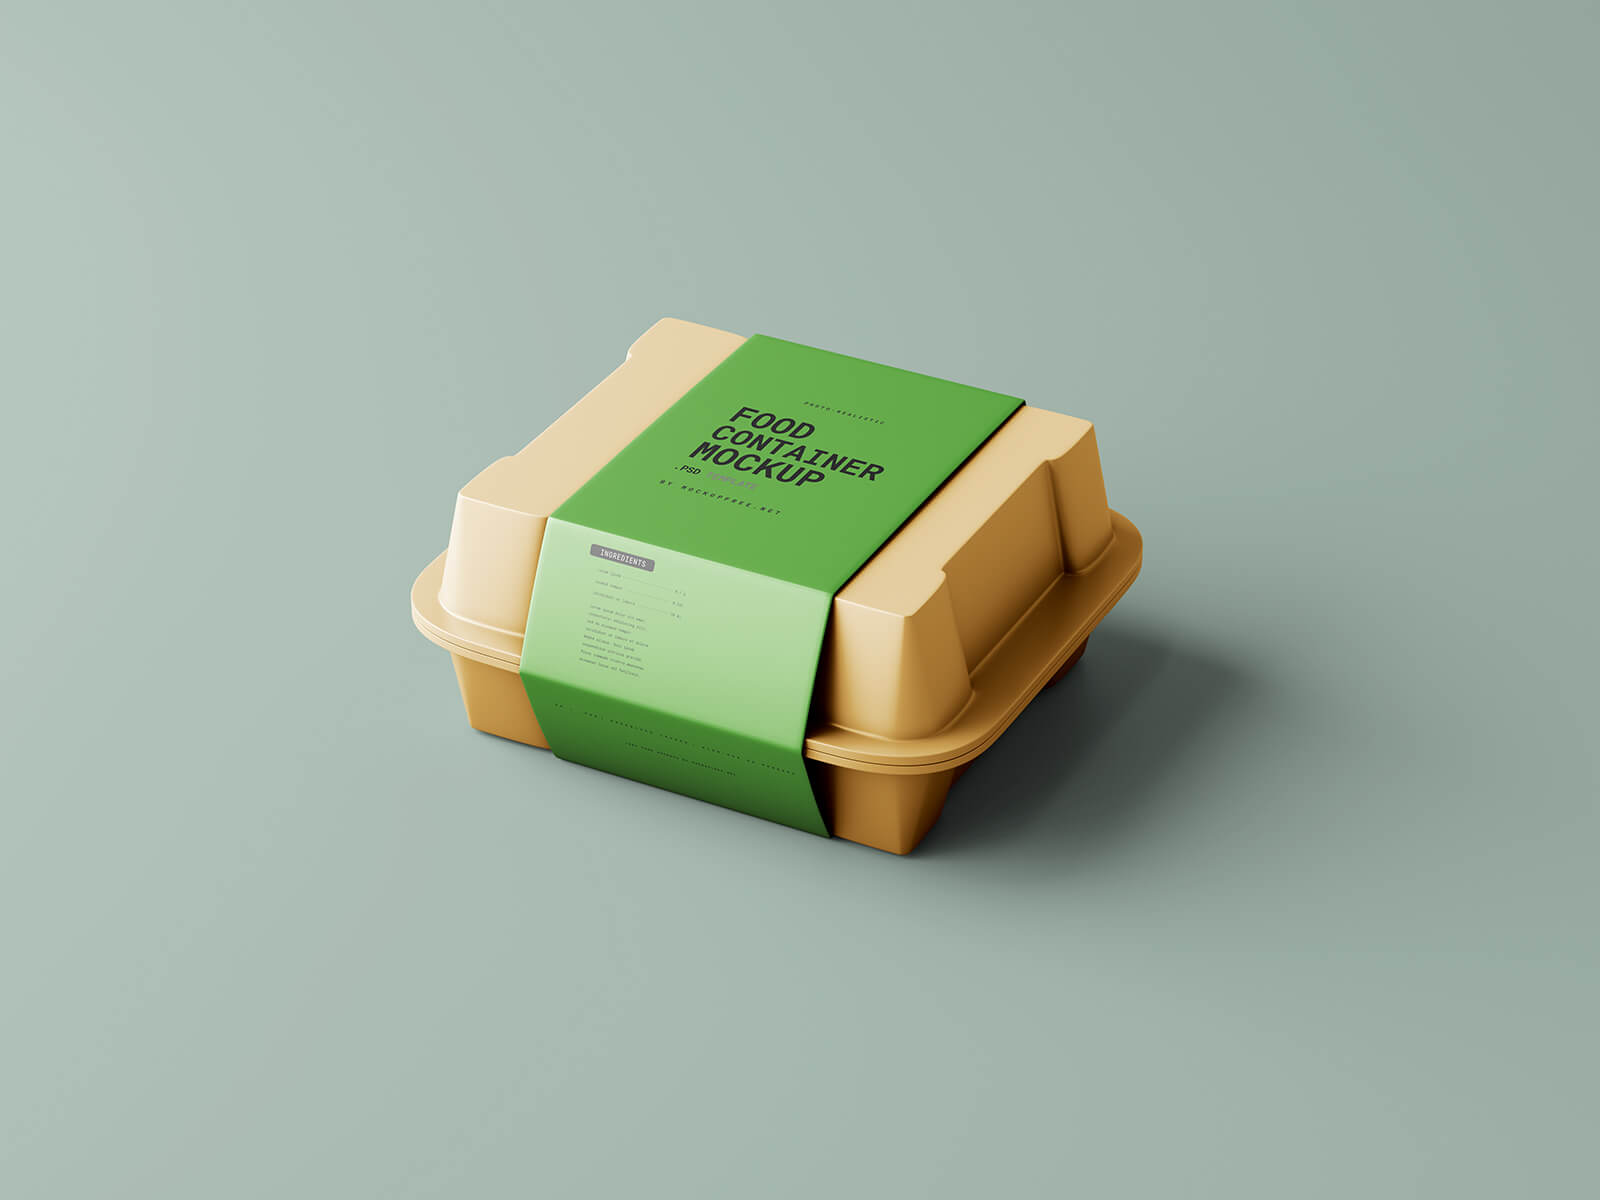 3 kostenlose Fastfood -Food -Box -Modelle Mockup -Dateien herausnehmen